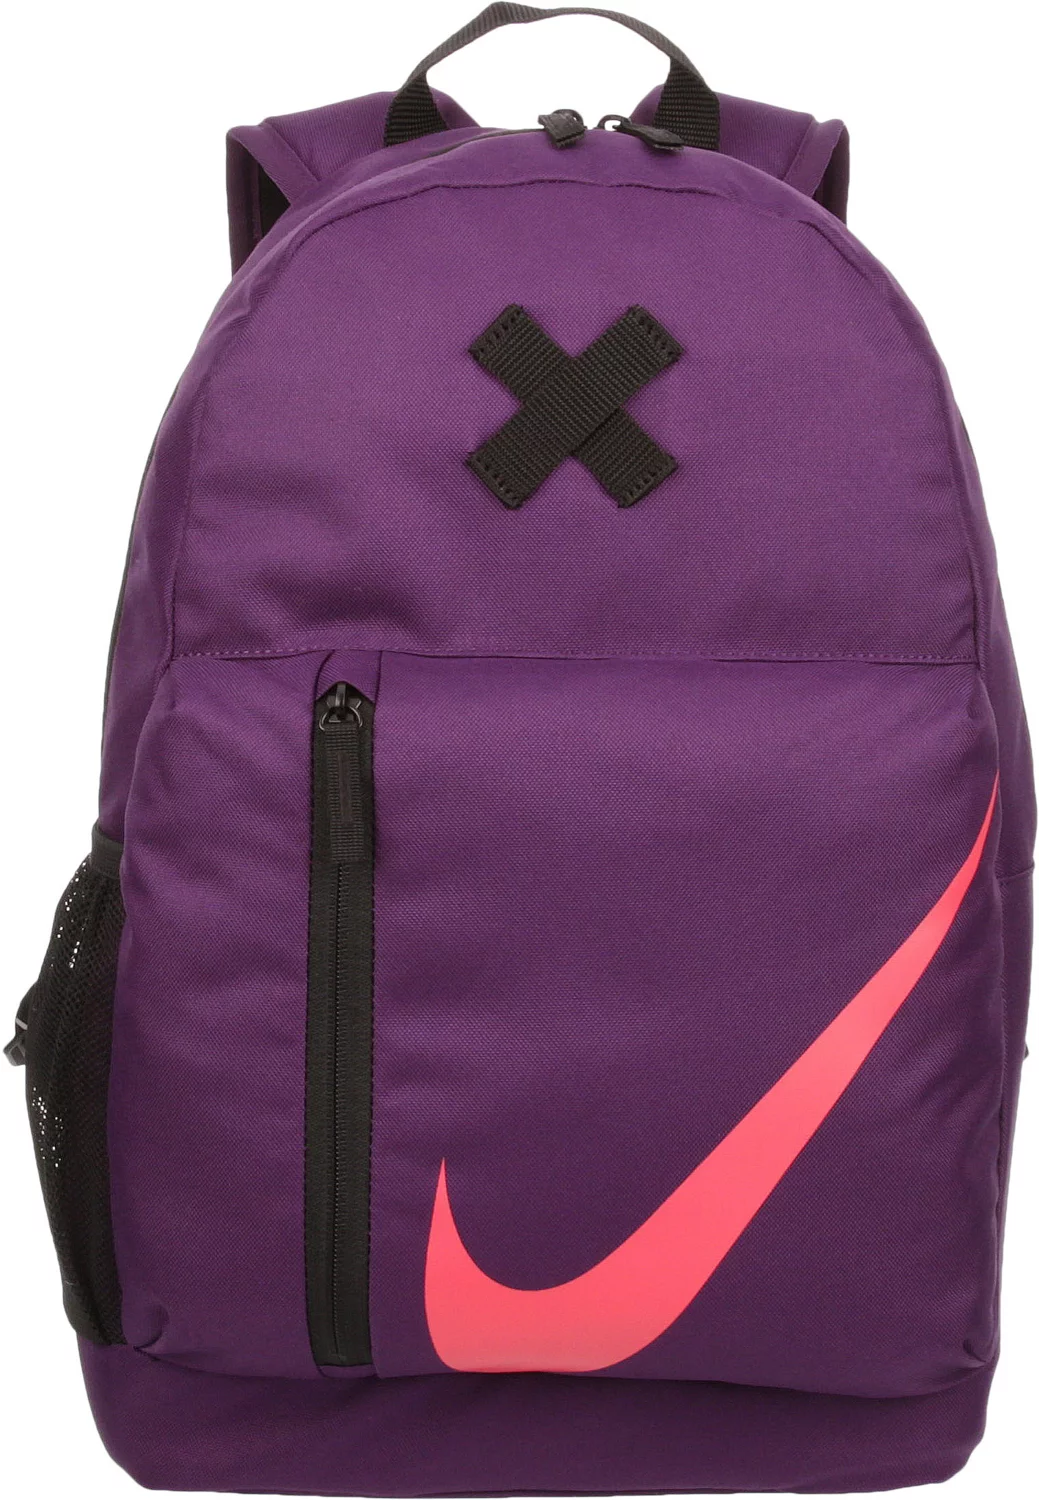 Backpacks | Nike™ Backpacks, Under Armor™ Backpacks | Academy